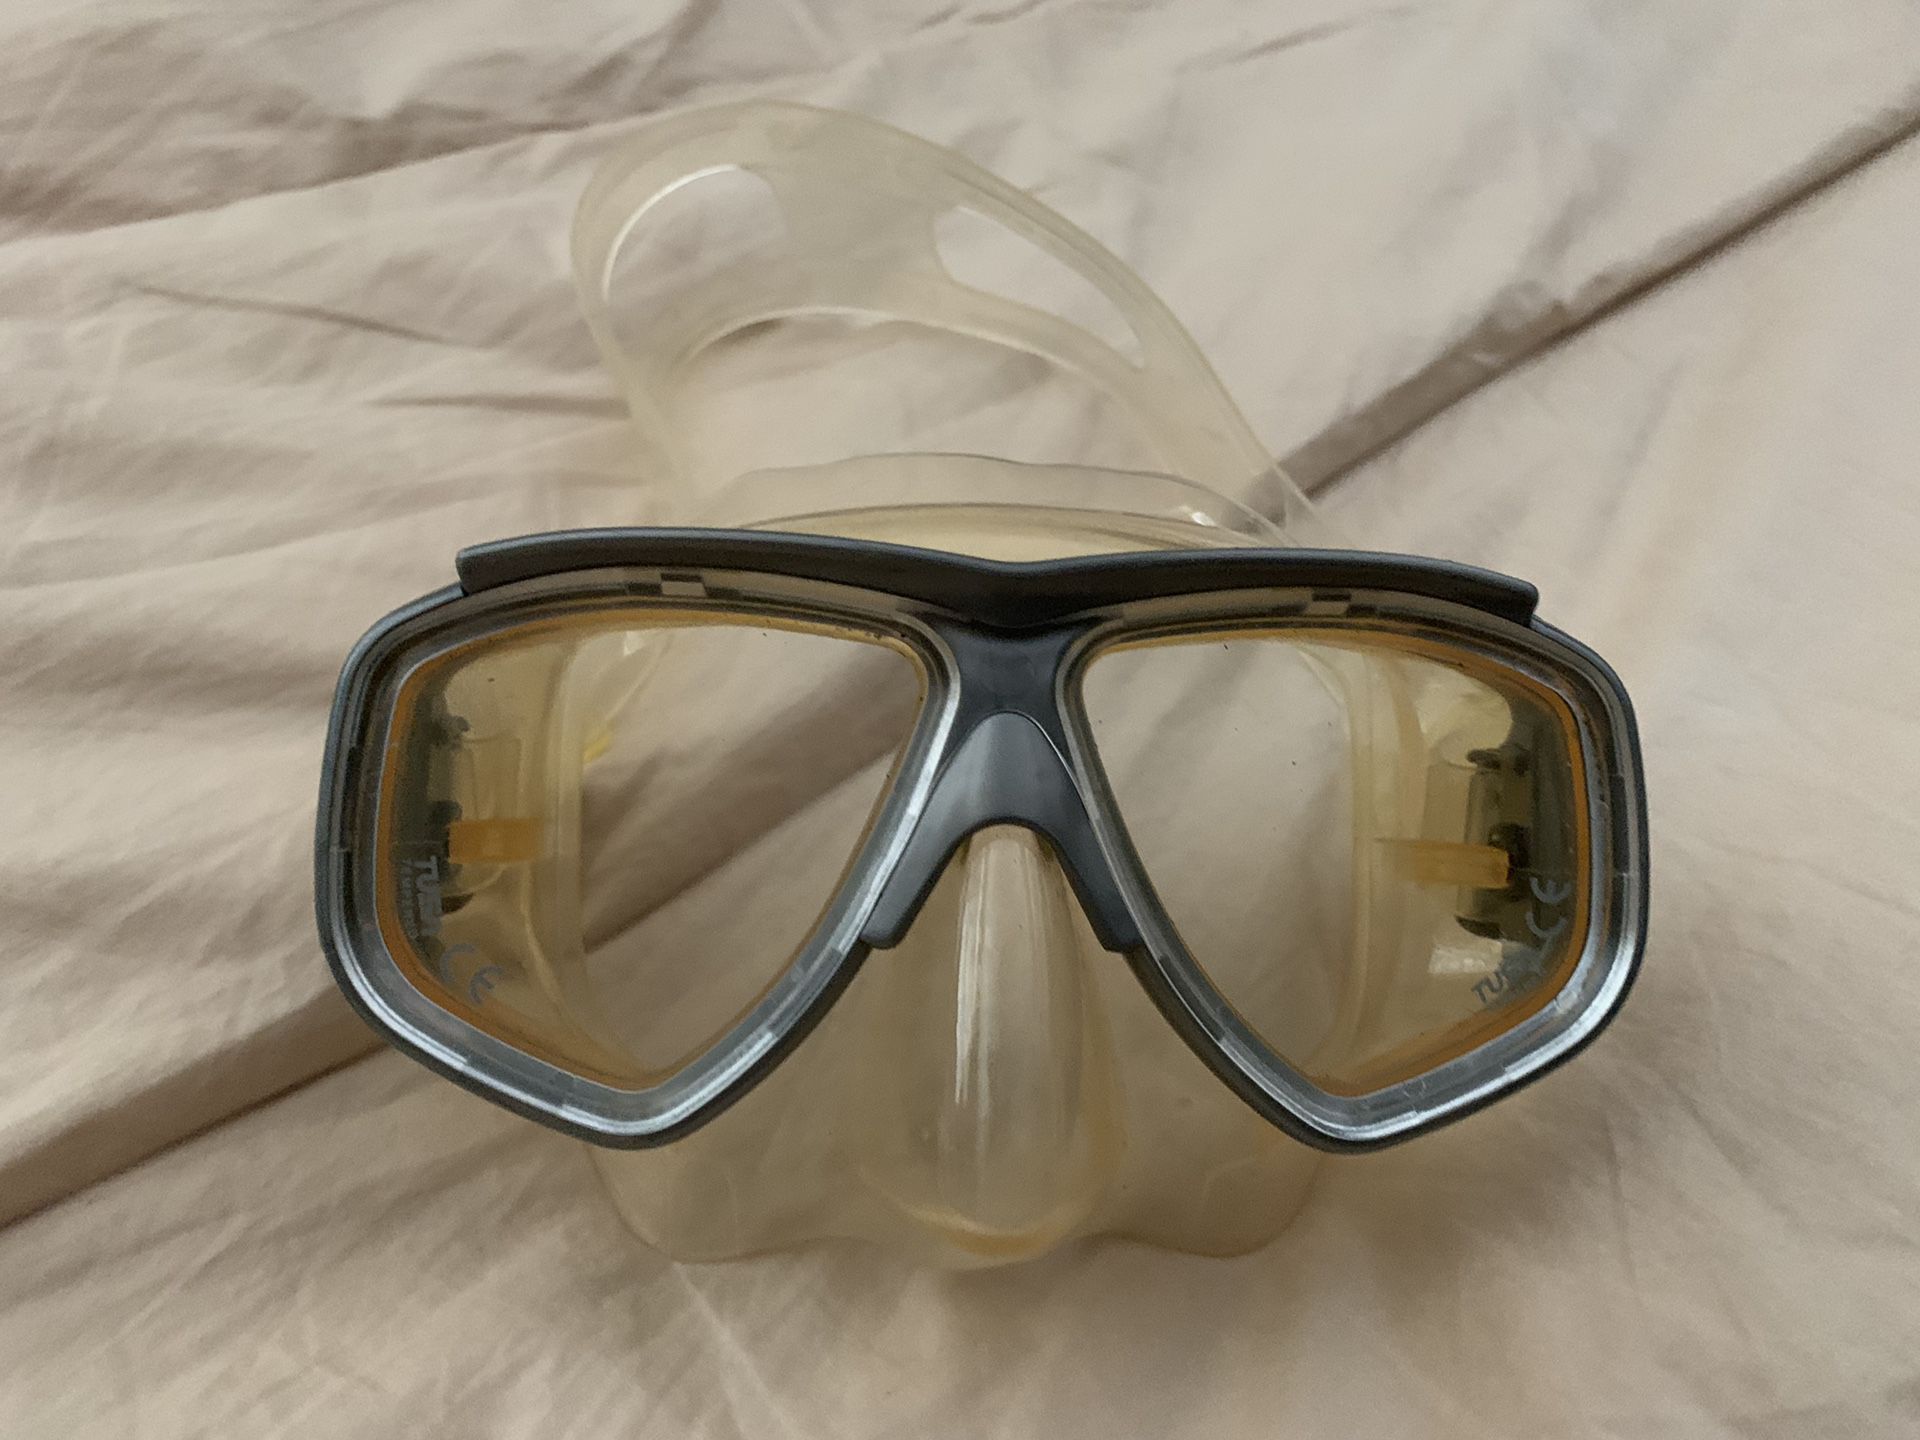 Scuba, snorkeling mask